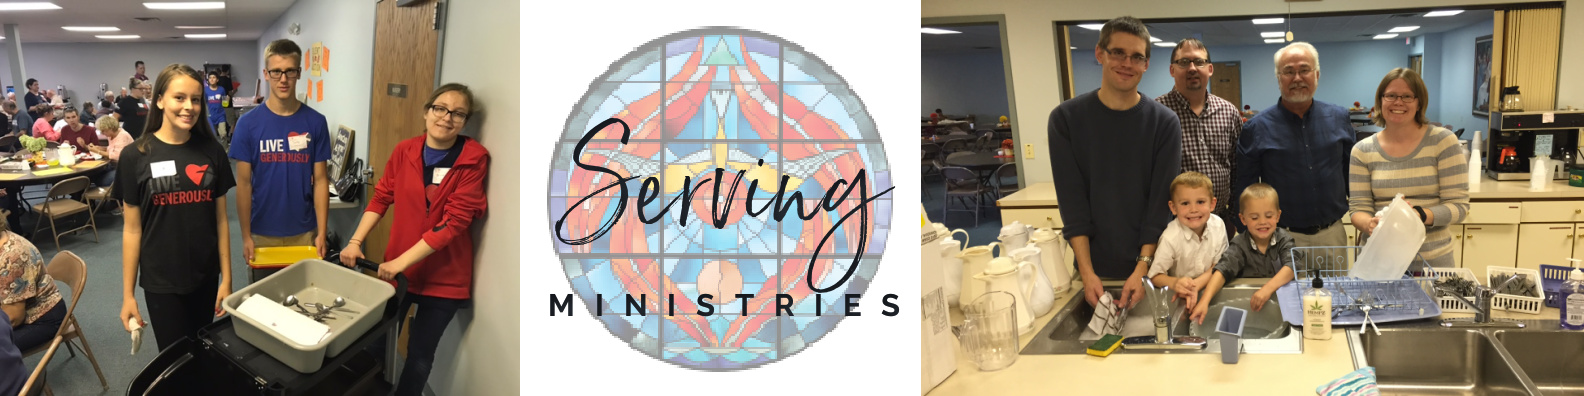 Serving ministry copy.jpg